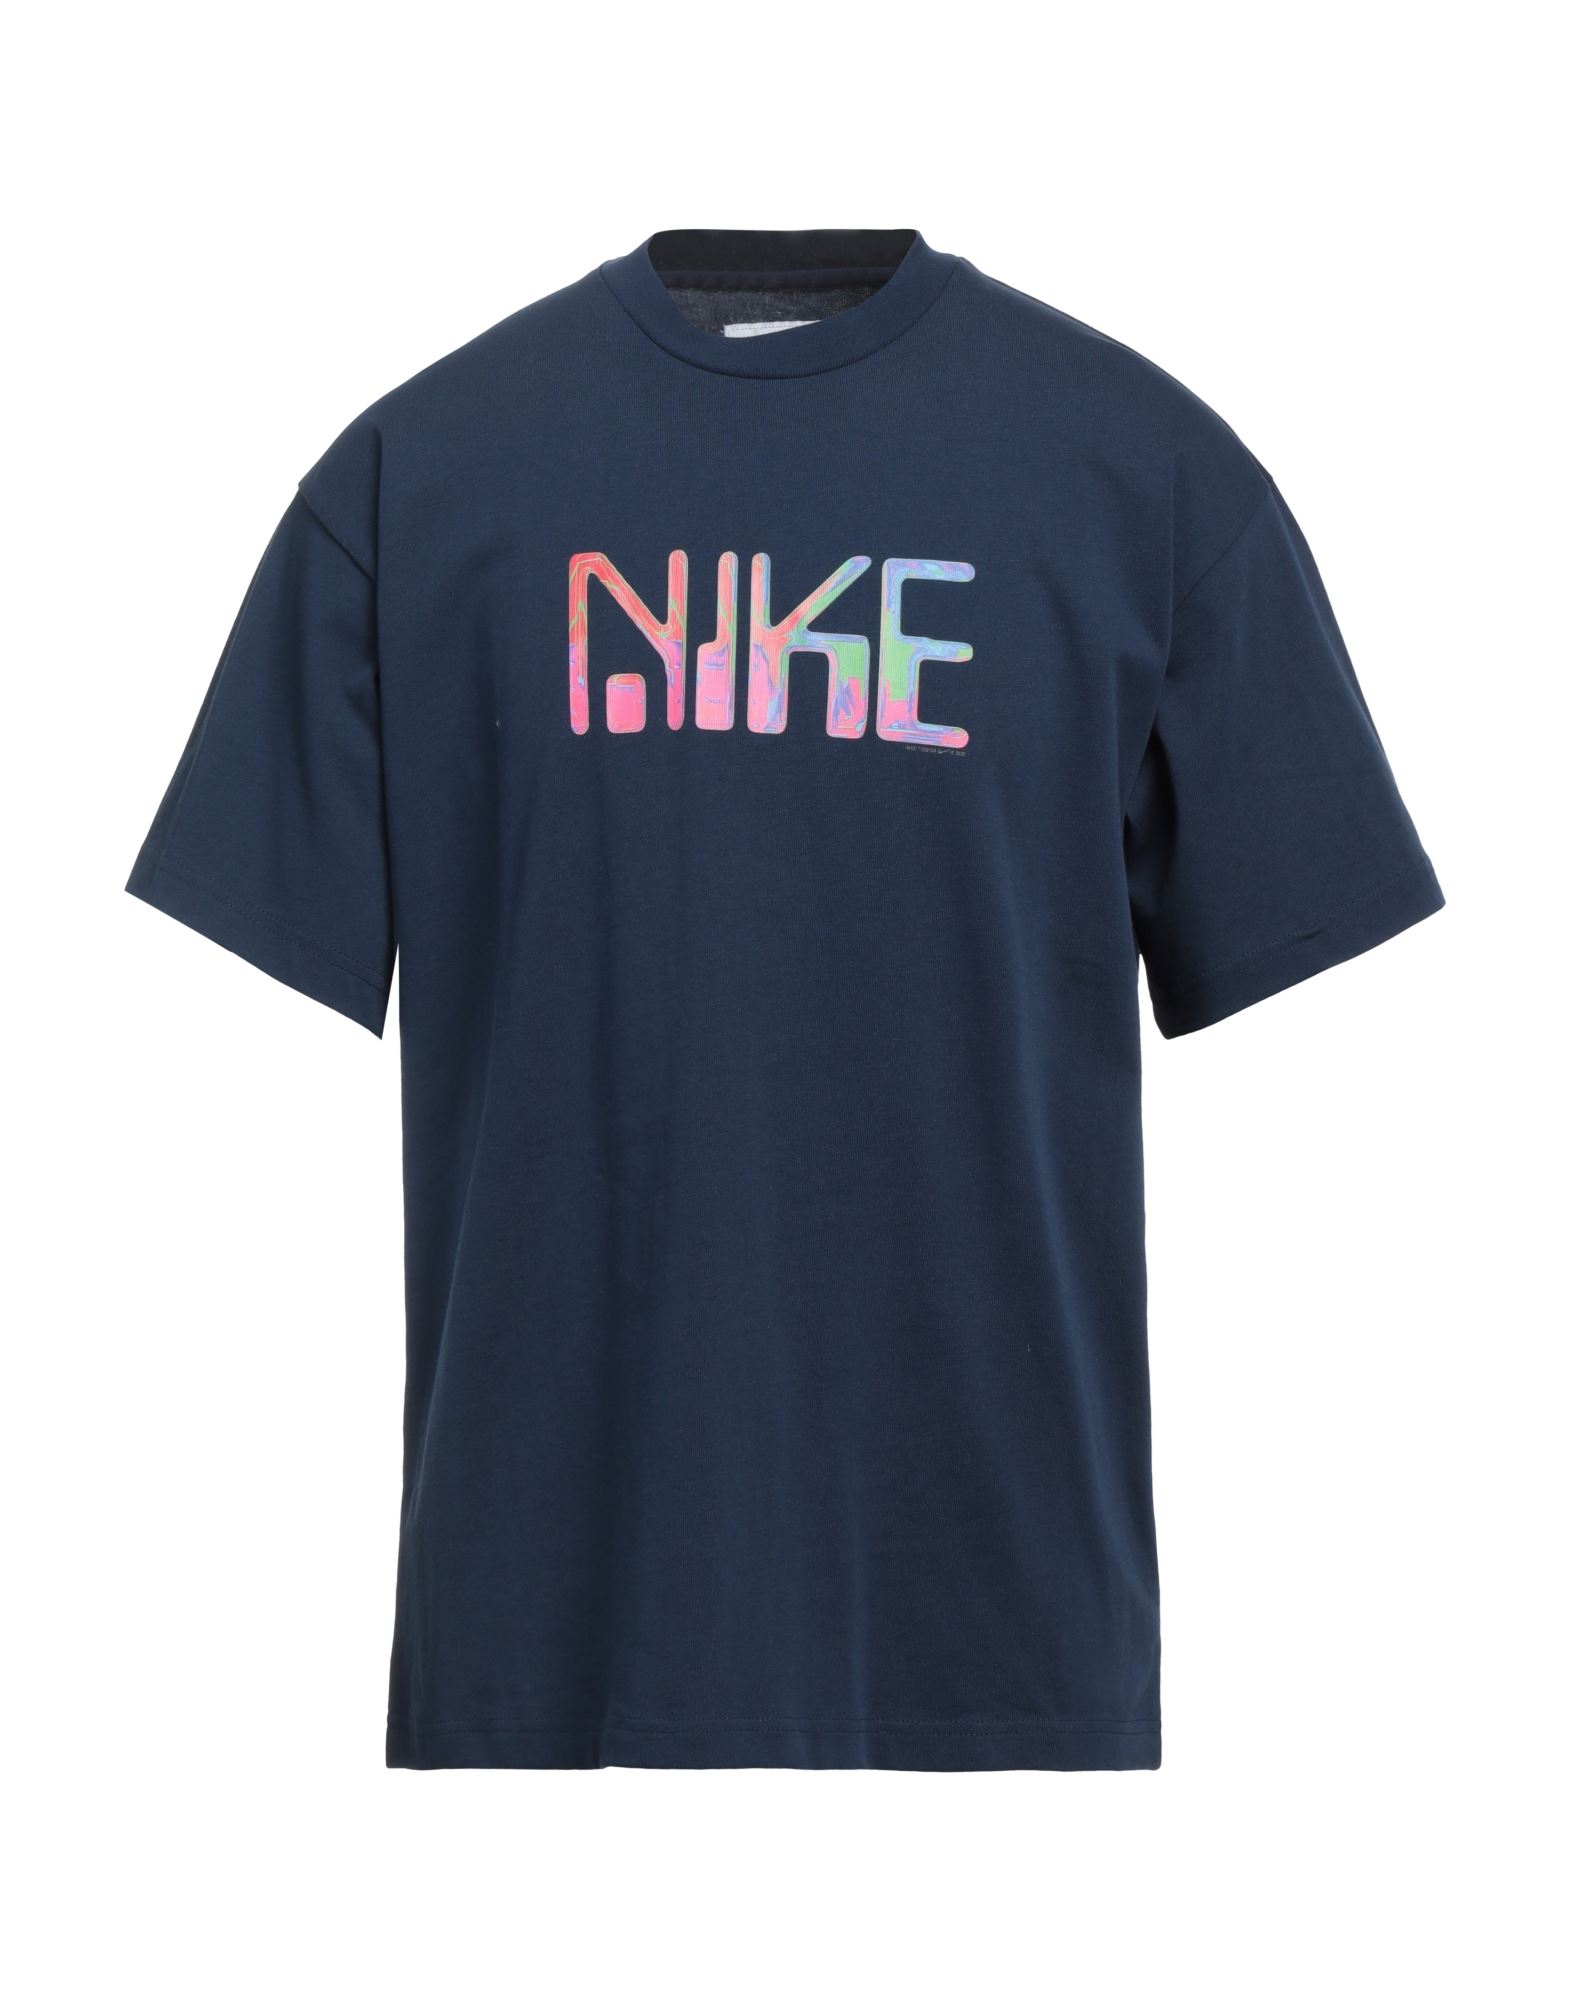 Nike Man T-shirt Midnight Blue Size Xs Cotton